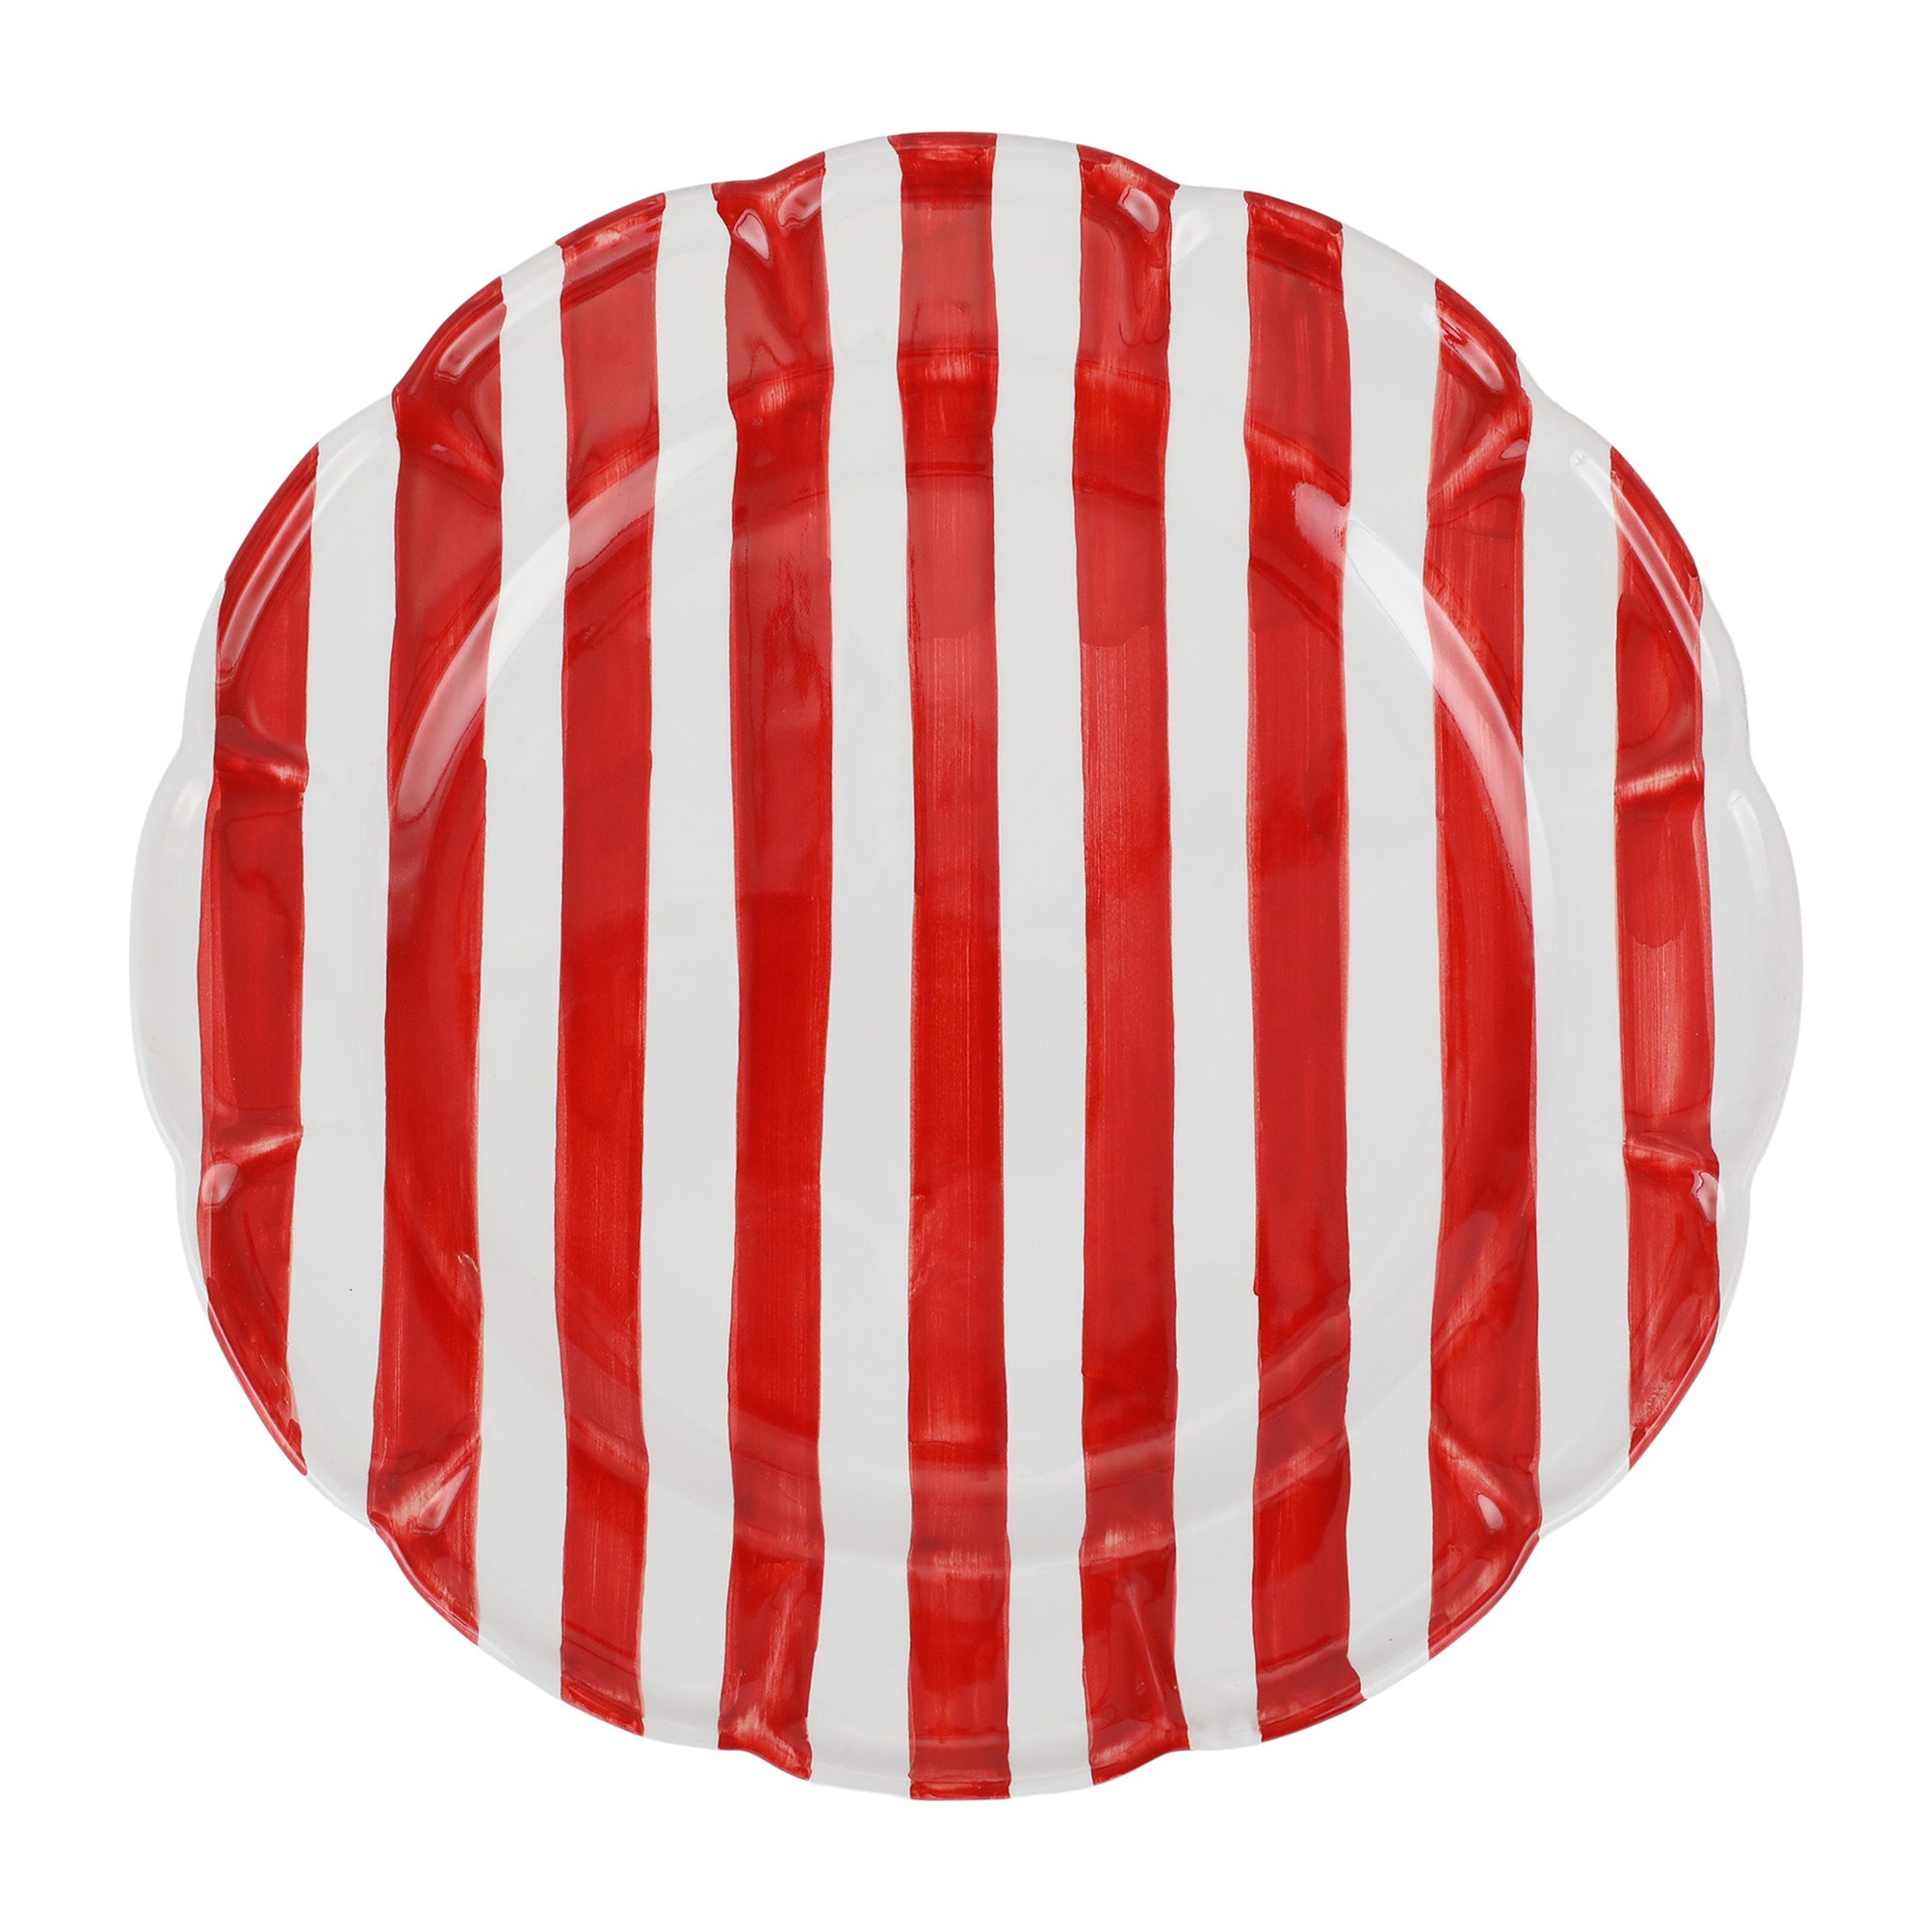 Amalfitana Red Stripe Round Platter